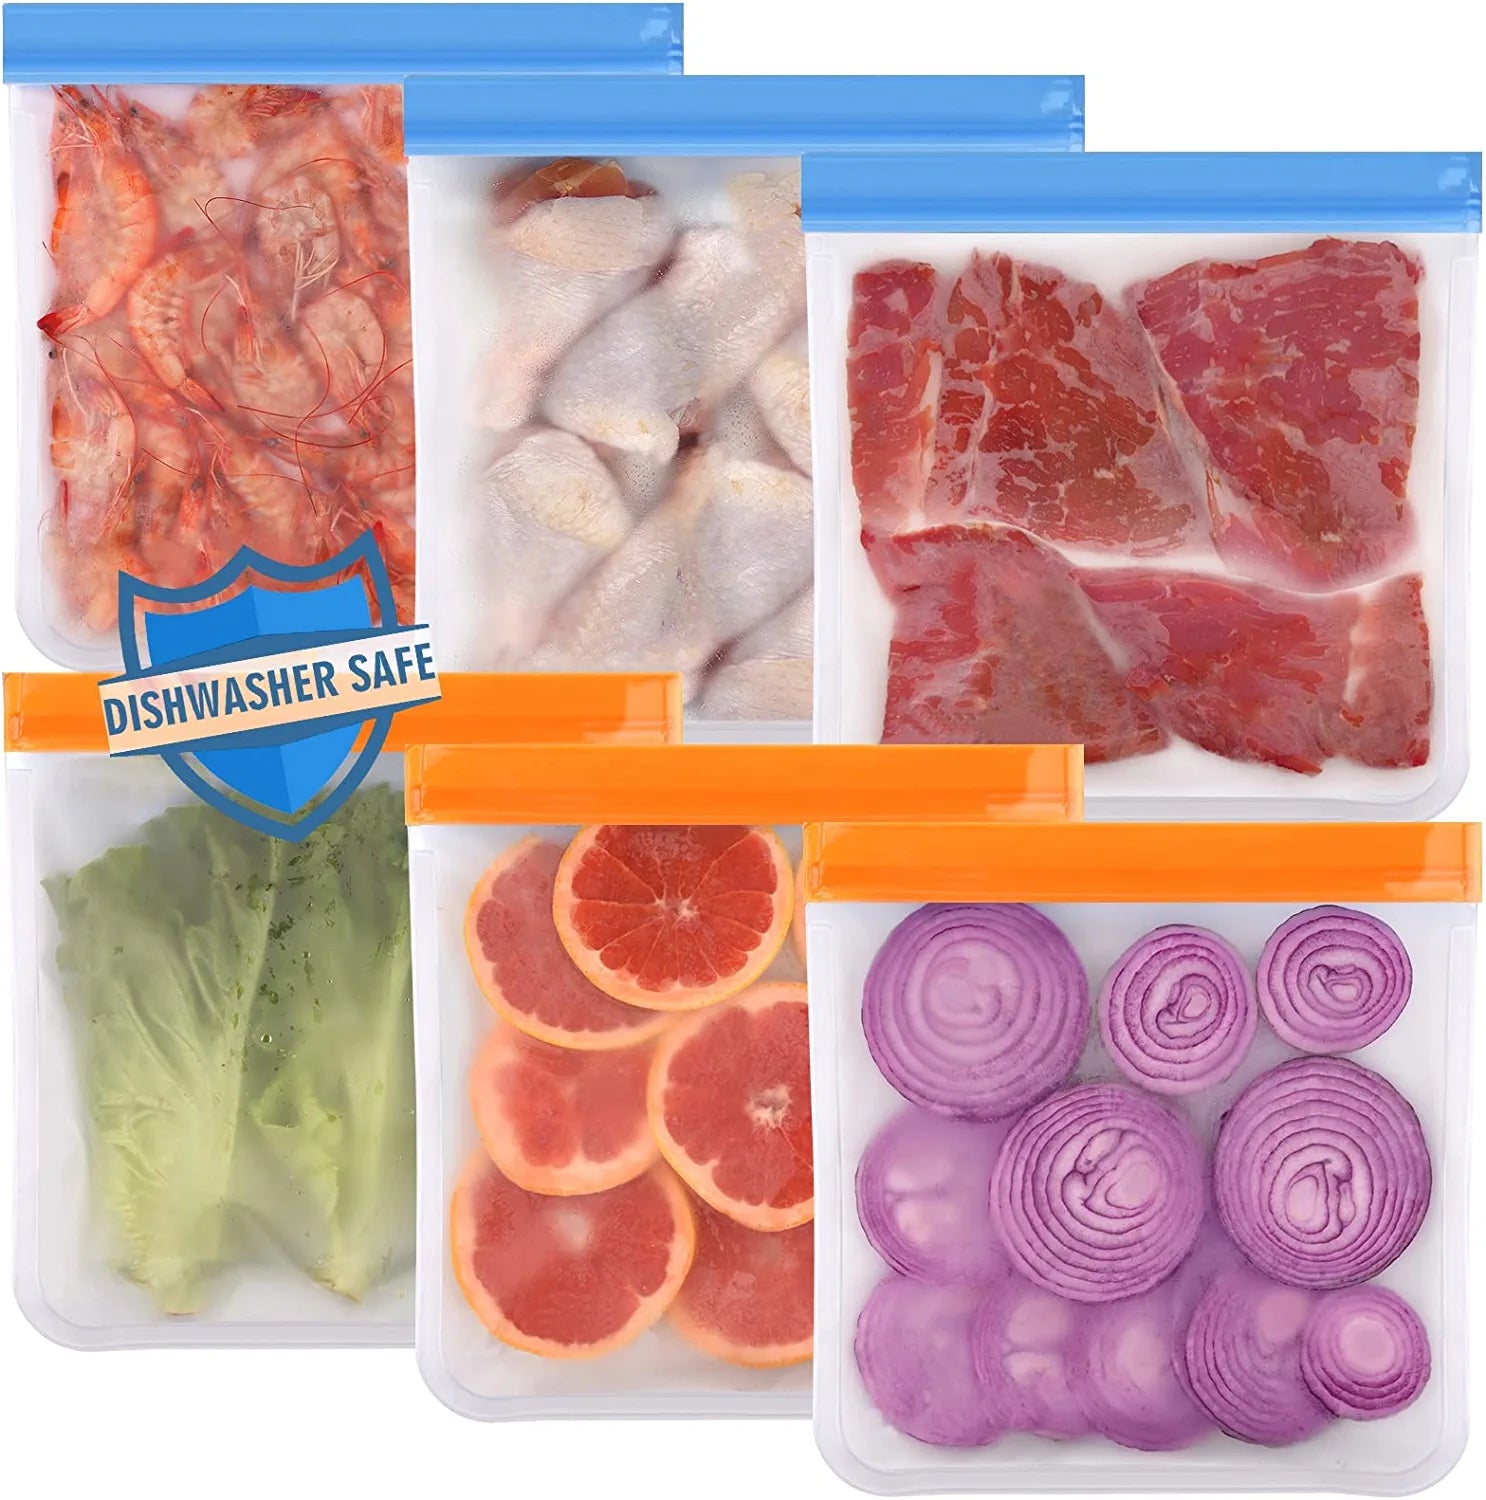 24 Pack (6 Gallon, 9 Sandwich, 9 Snack) Reusable Food Storage Bags – Lerine